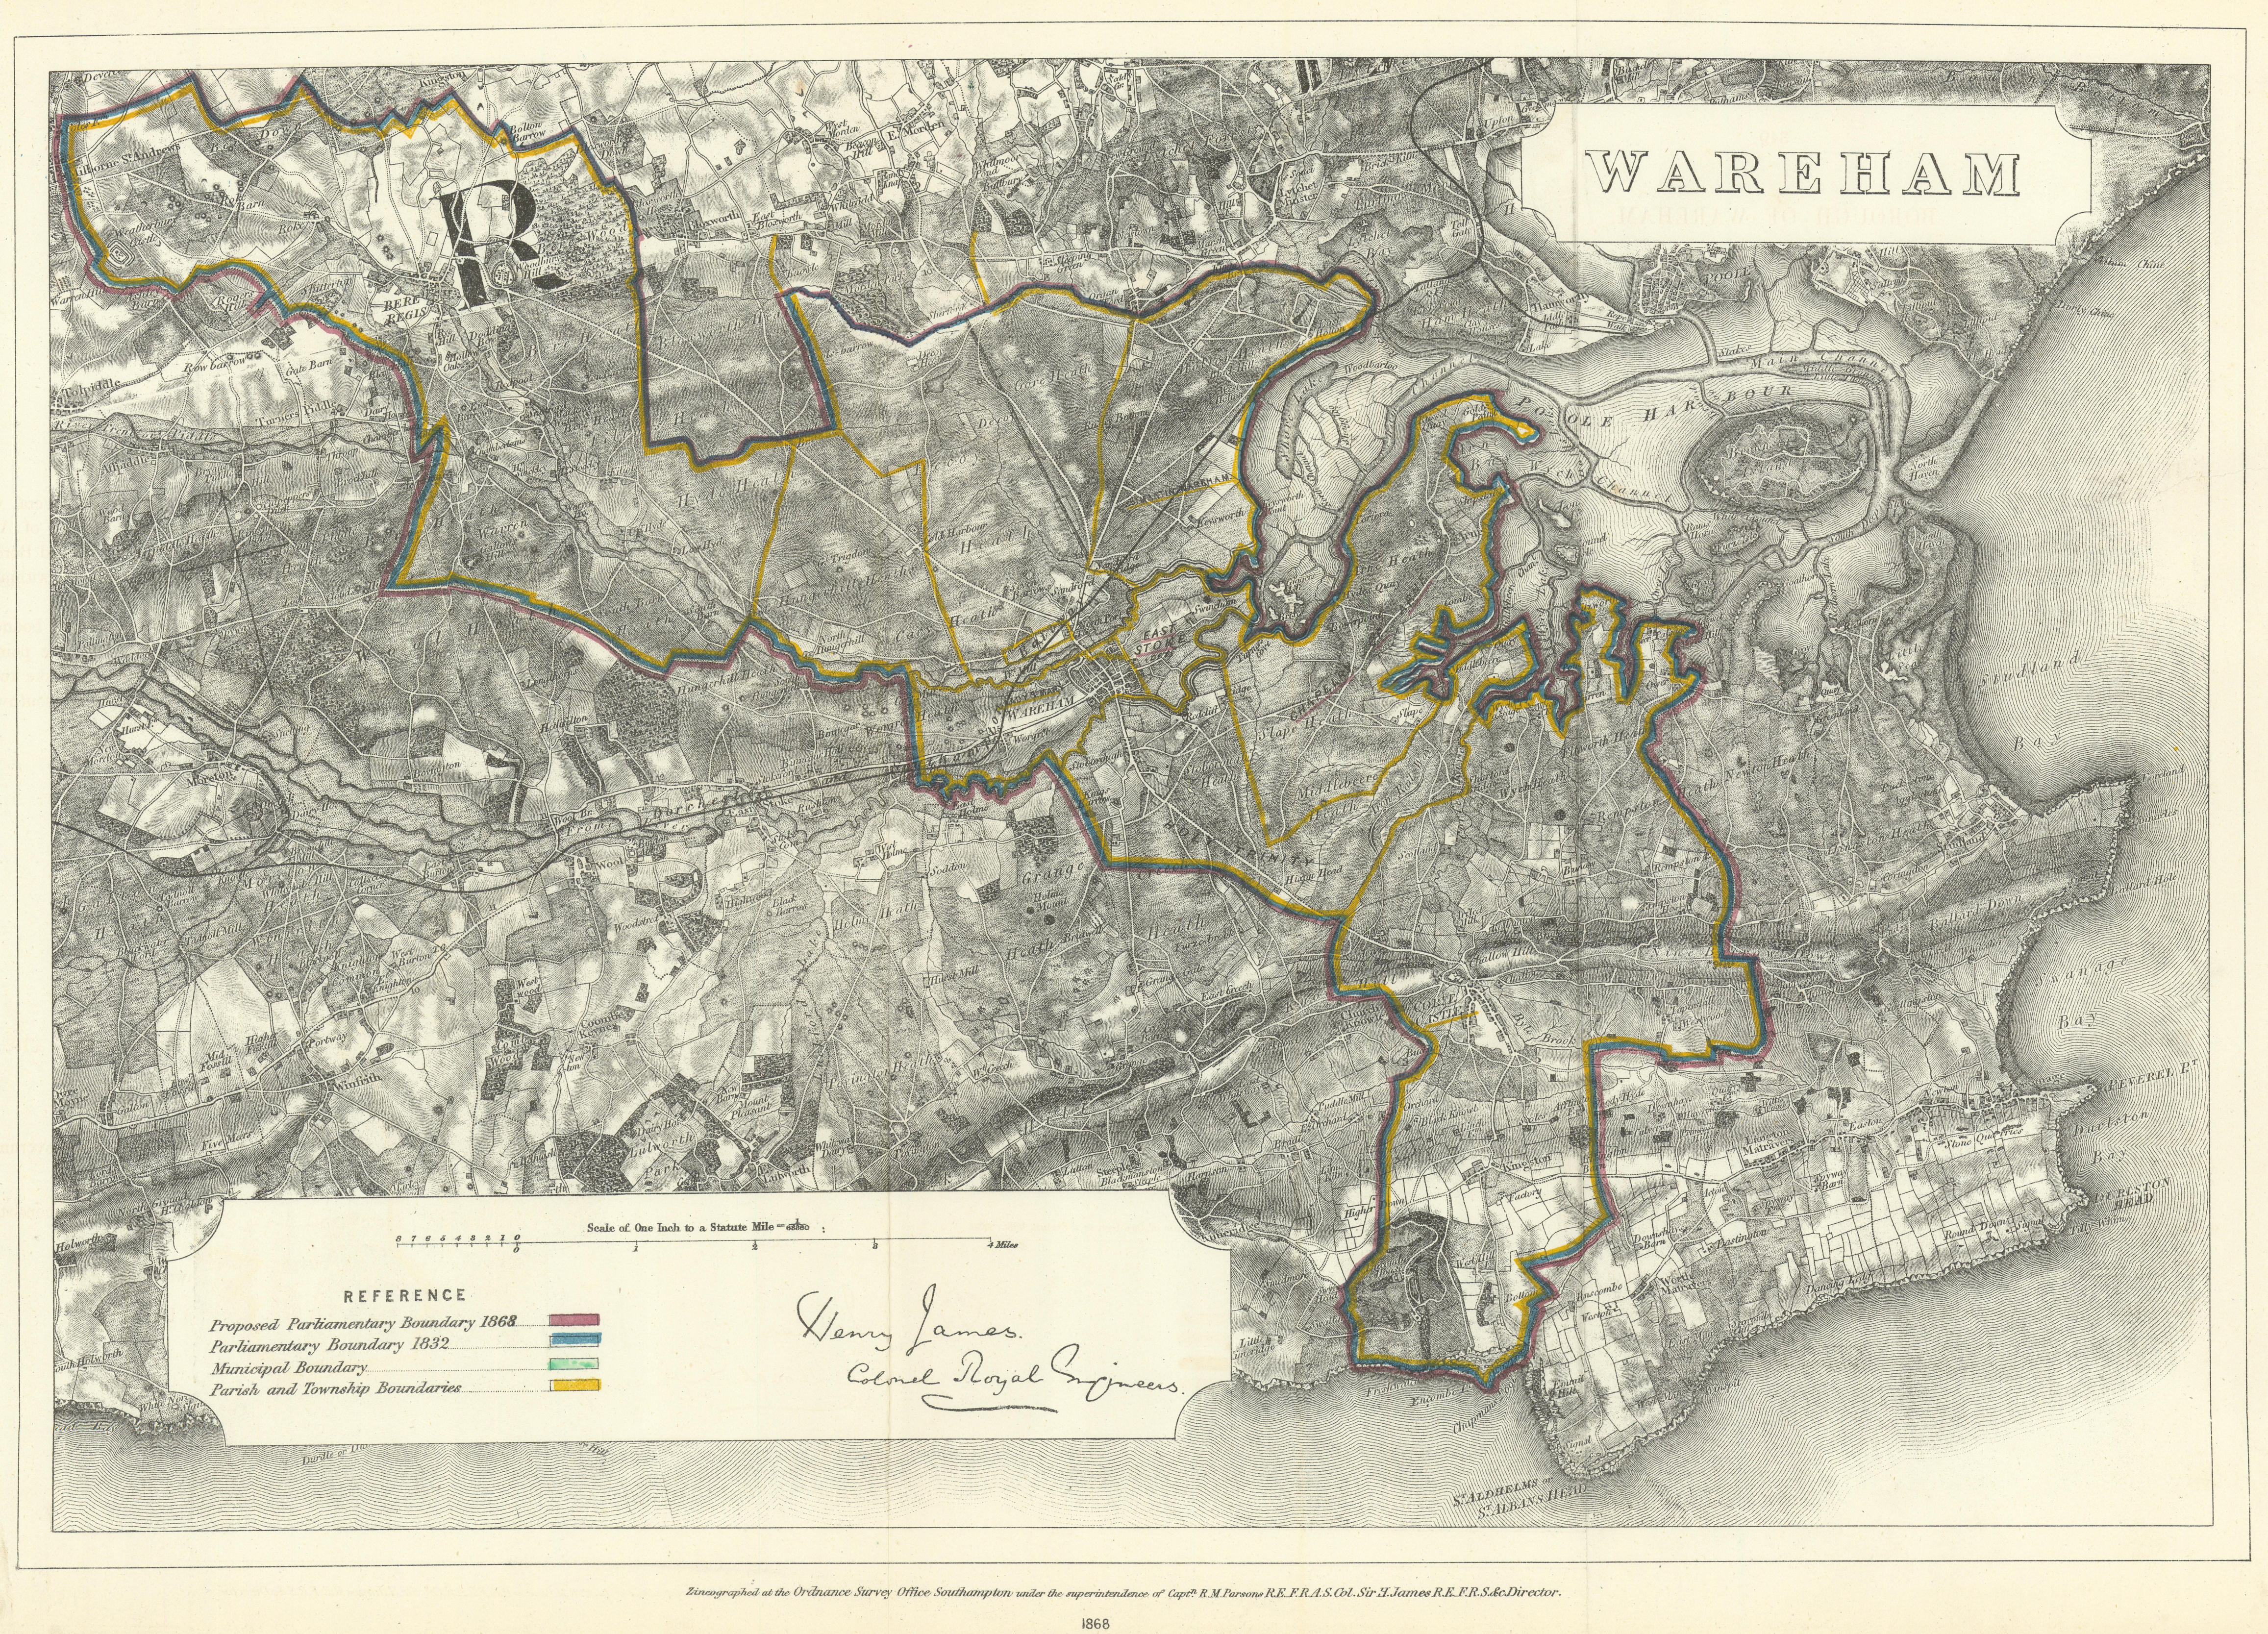 Associate Product Wareham, Dorset. JAMES. Parliamentary Boundary Commission 1868 old antique map